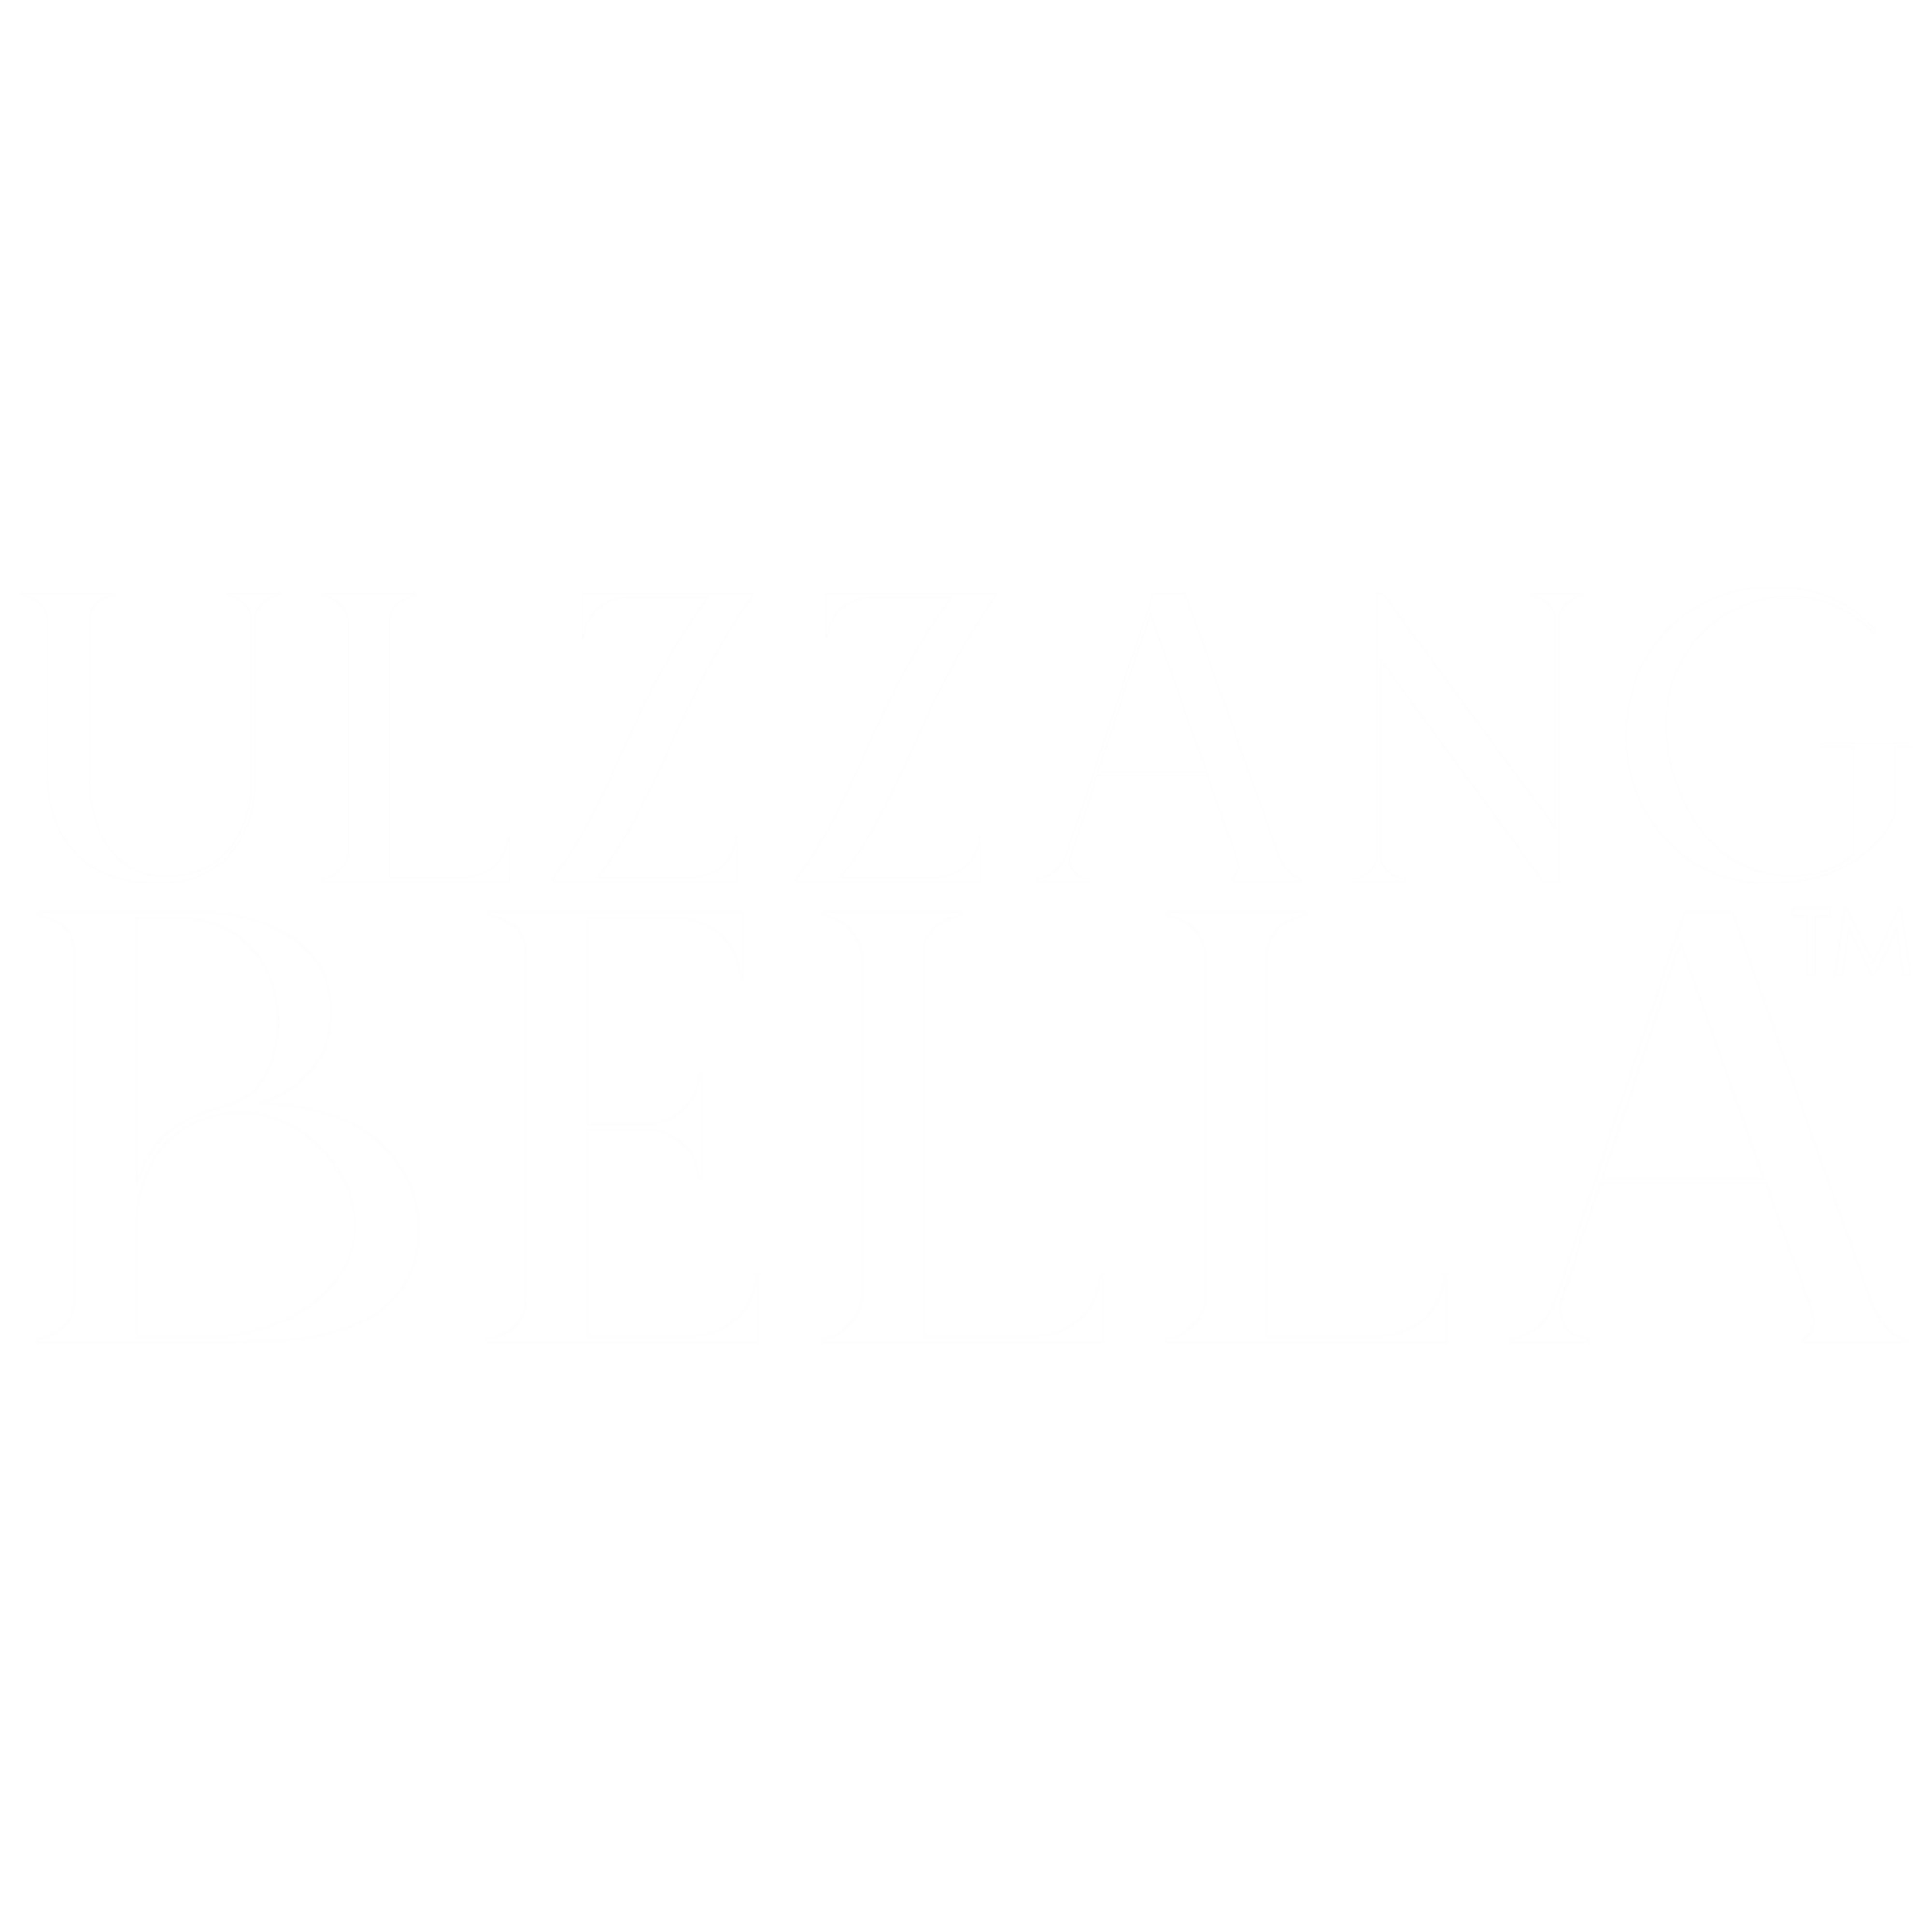 ULZZANG BELLA